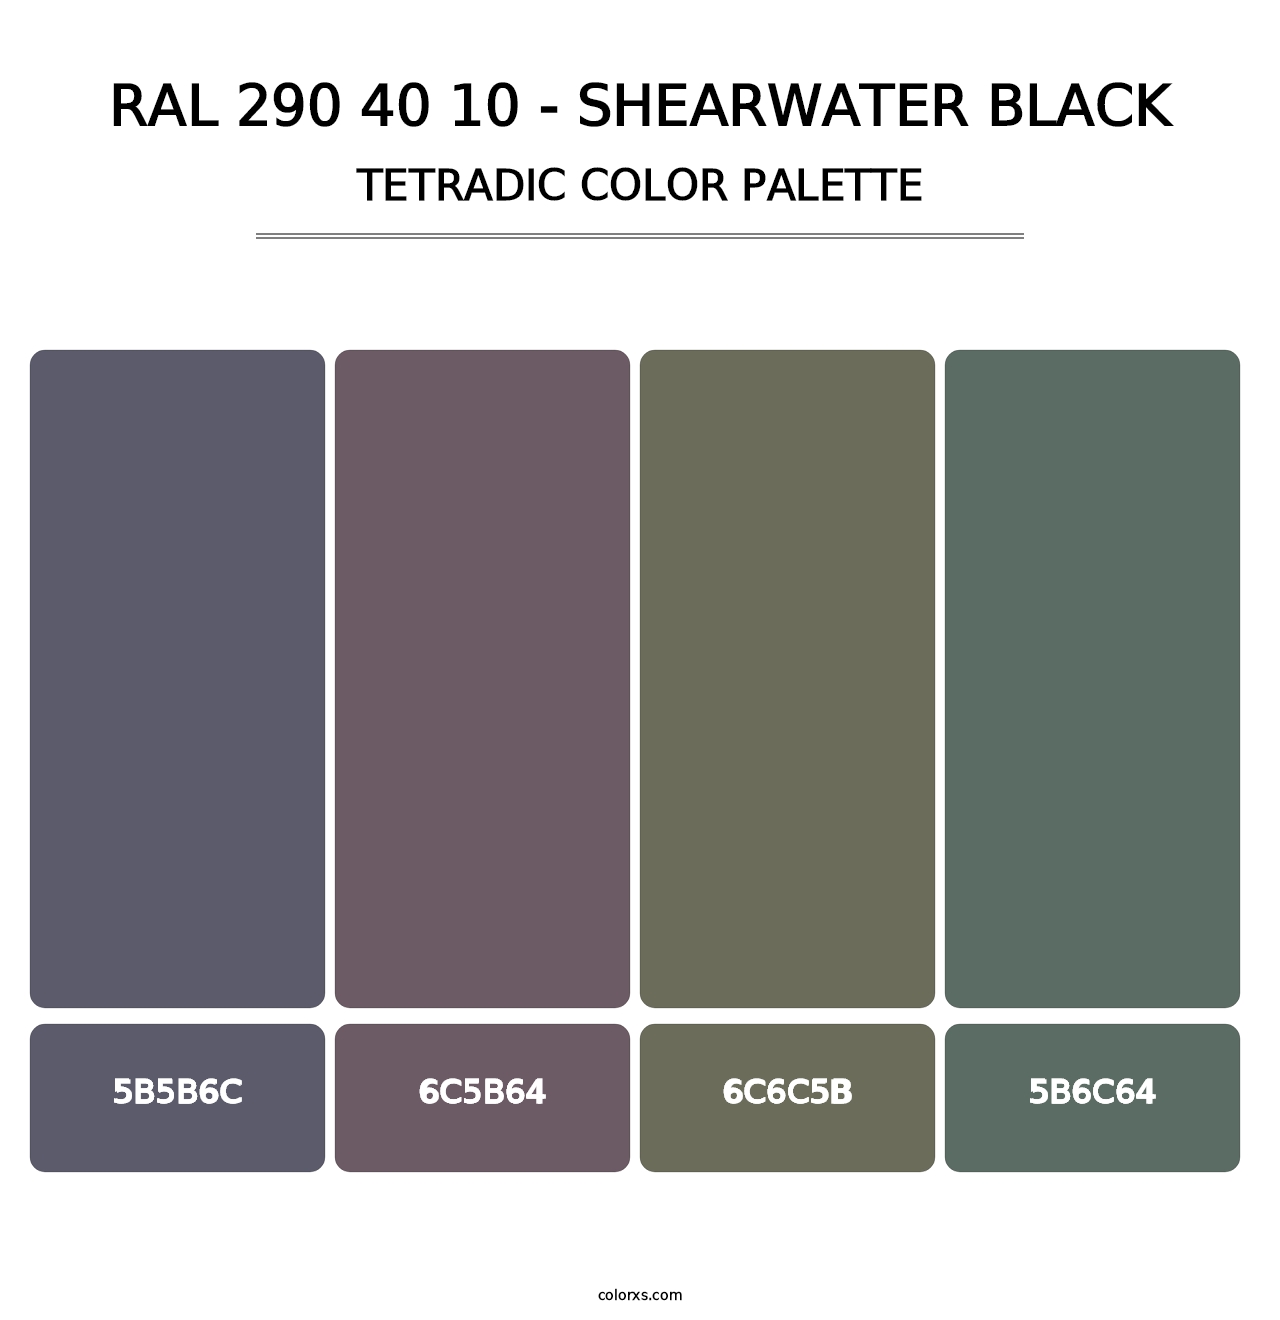 RAL 290 40 10 - Shearwater Black - Tetradic Color Palette